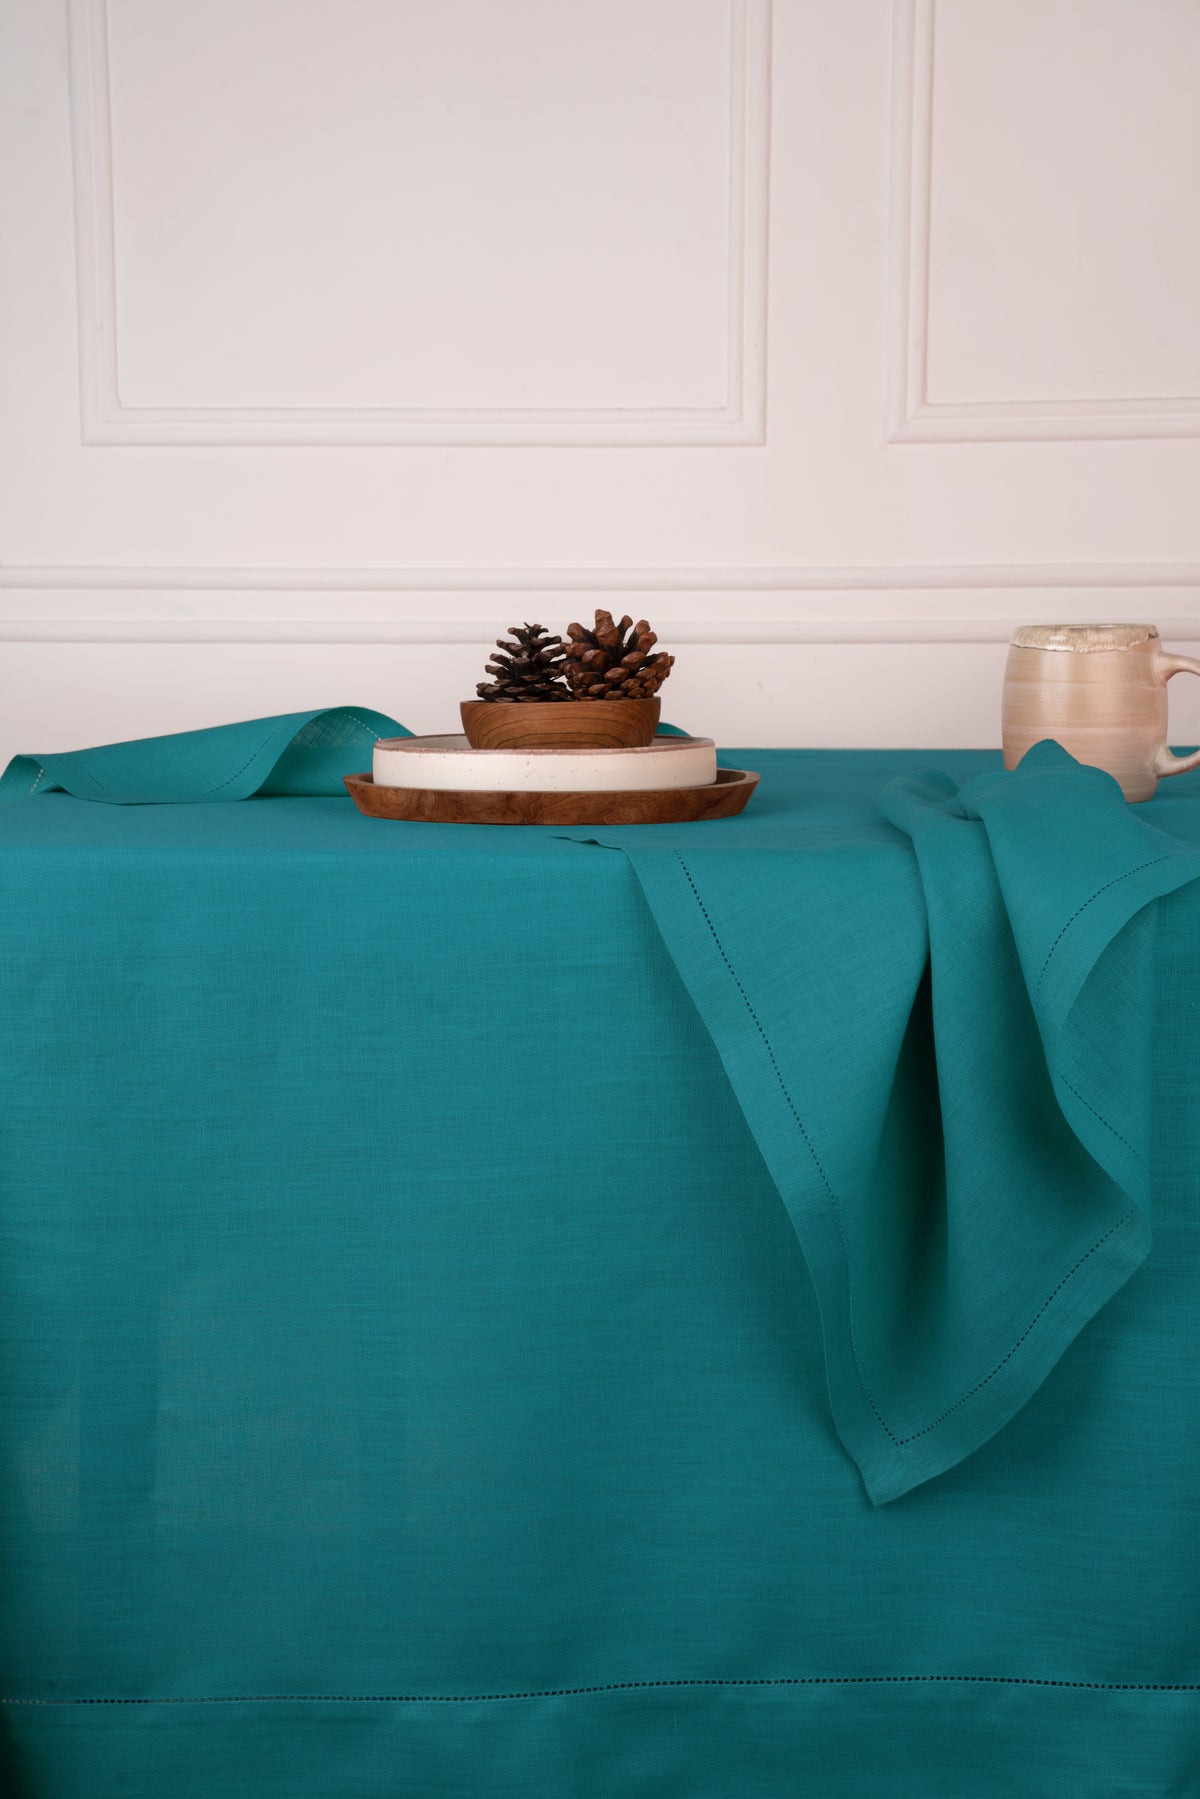 Teal Blue Pure Linen Tablecloth - Hemstitch